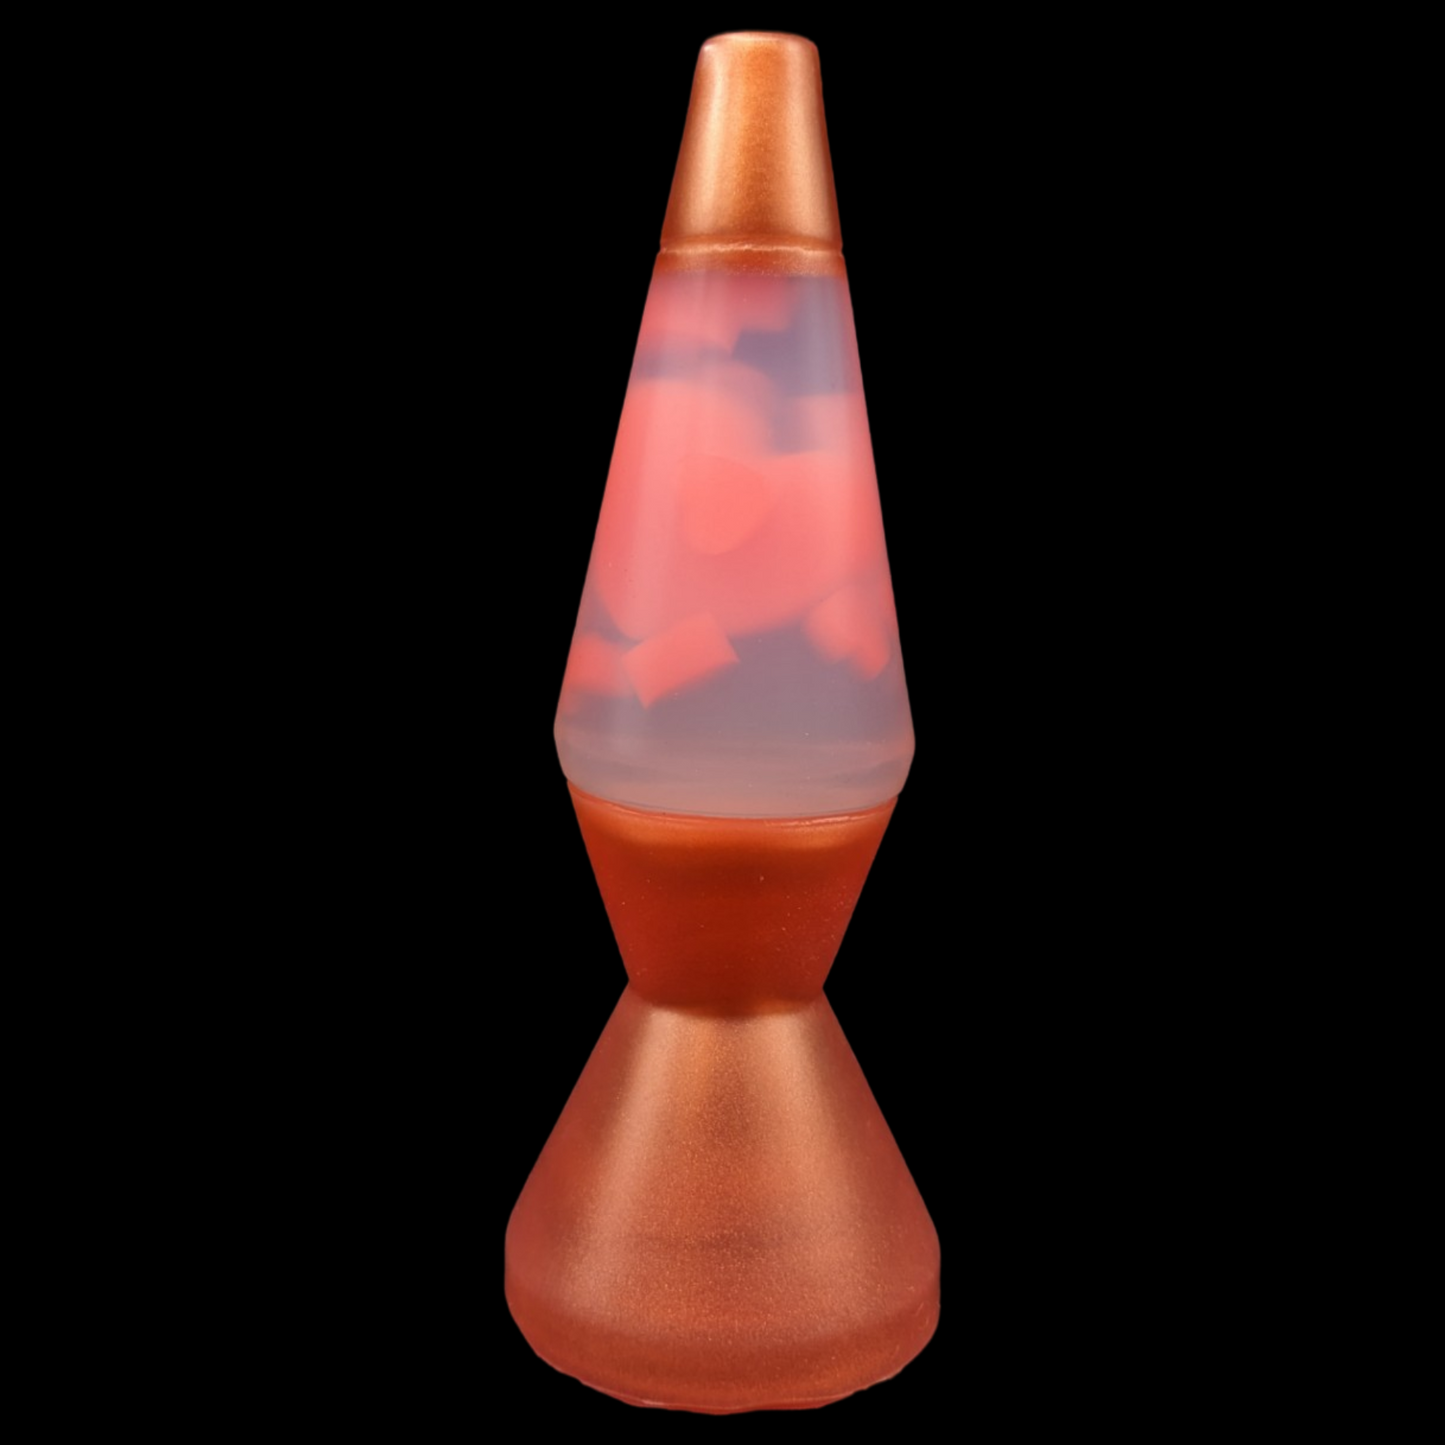 Lava Lamp Butt Plug - Medium size - Med NC 00-45 firmness